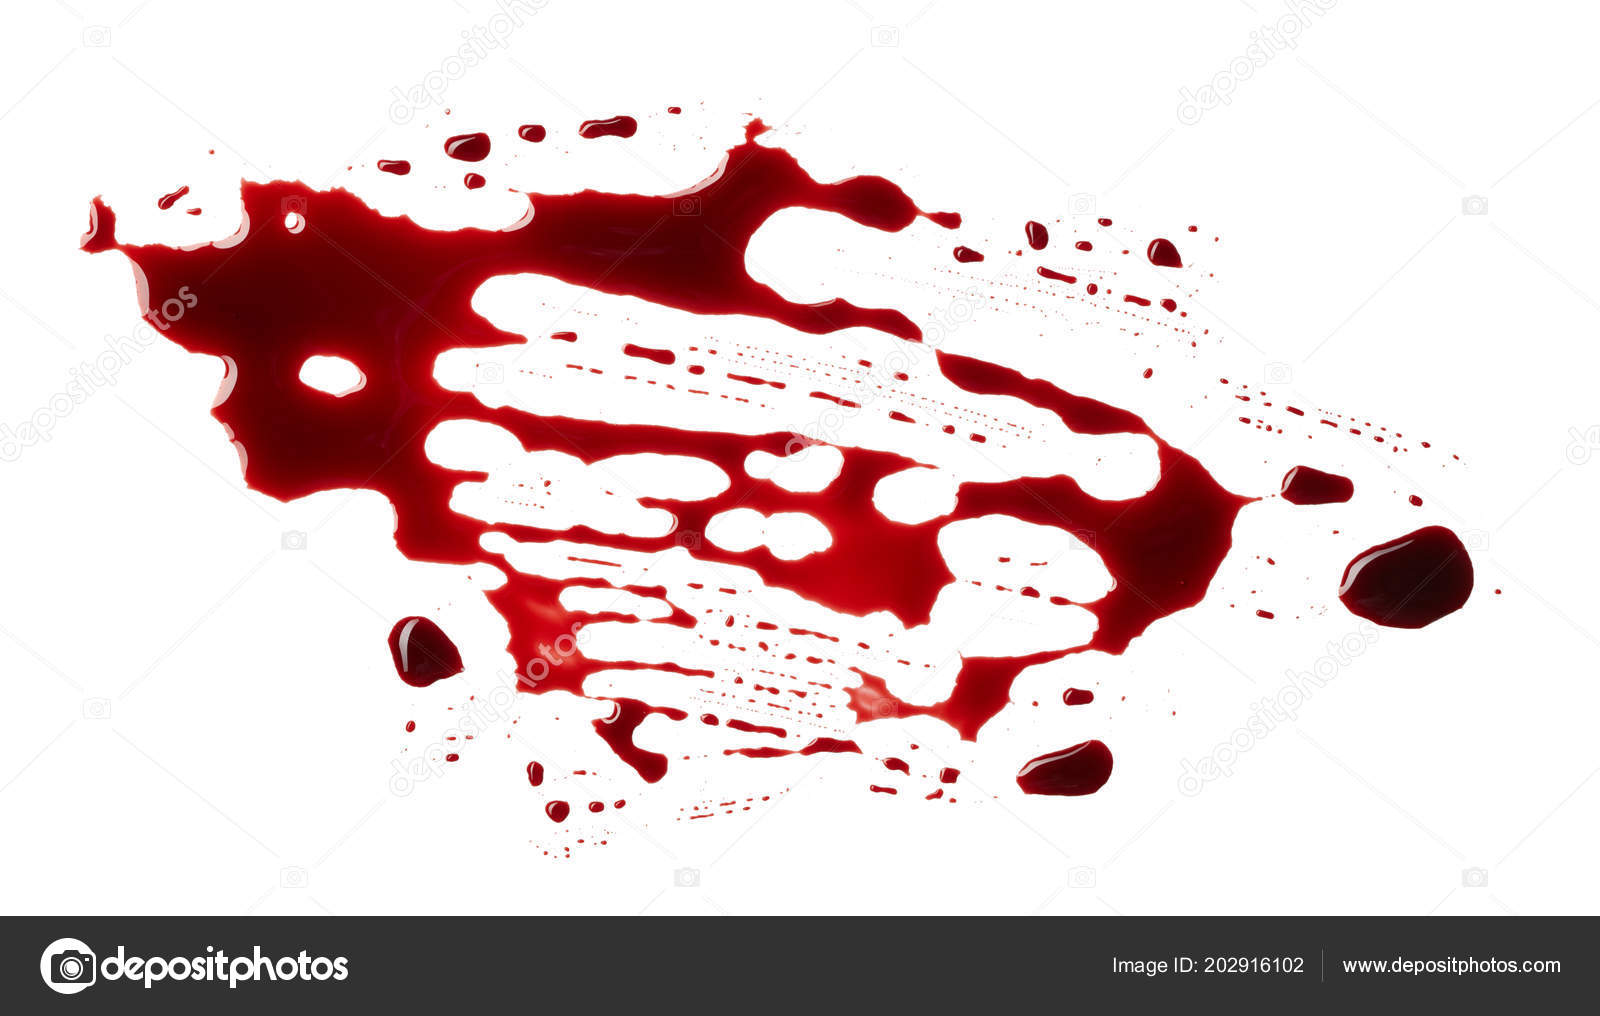 Blood Splatter Wallpaper